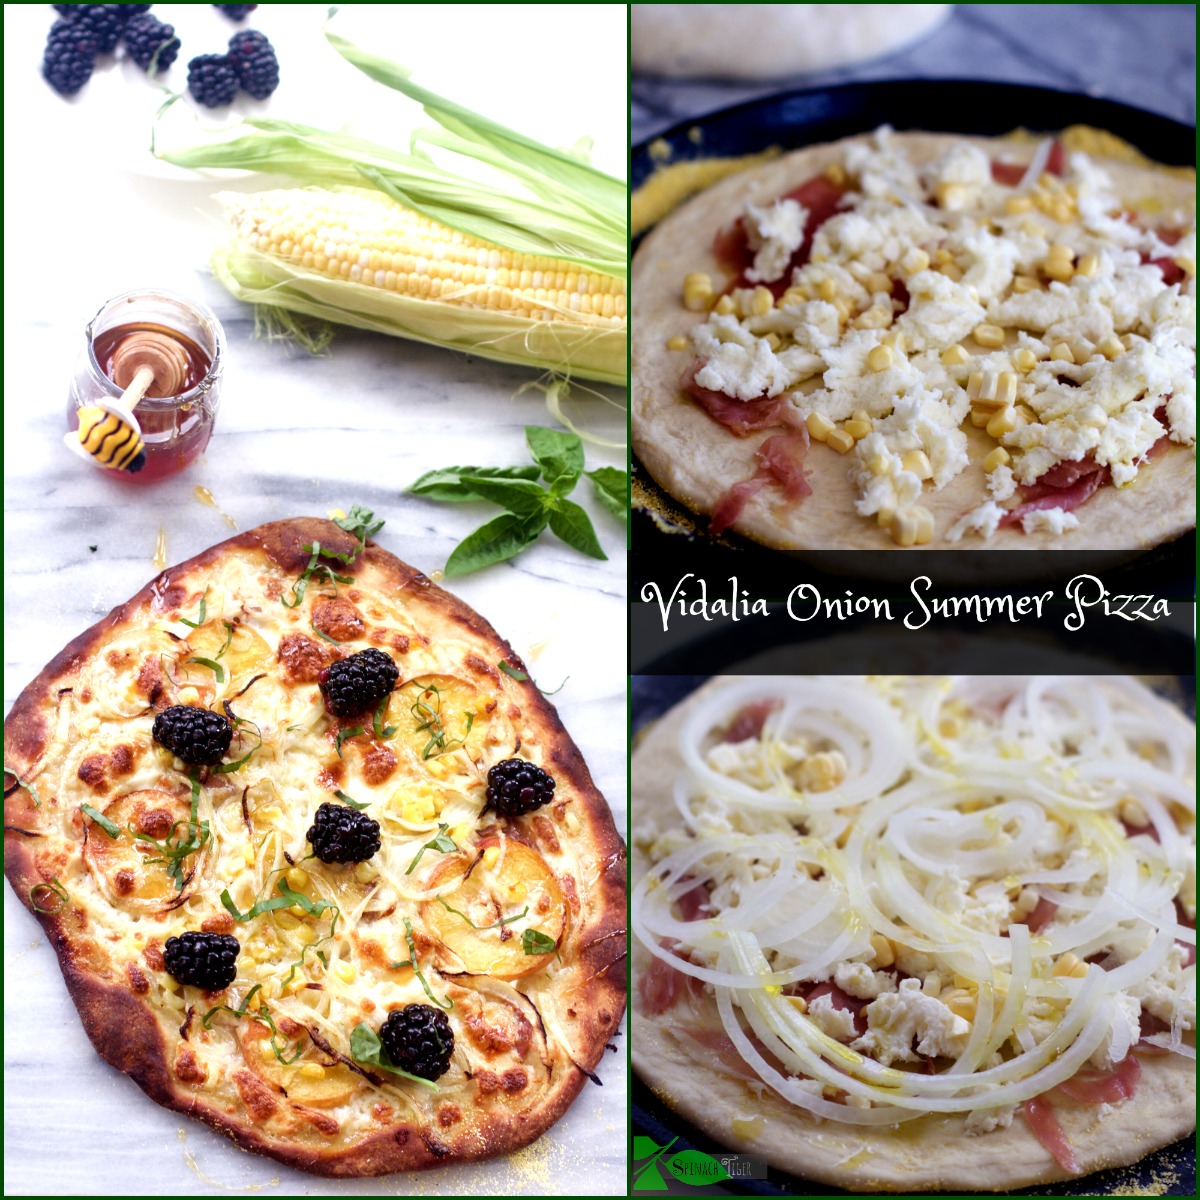 Vidalia Onion Summer Fruit Pizza by Spinach Tiger